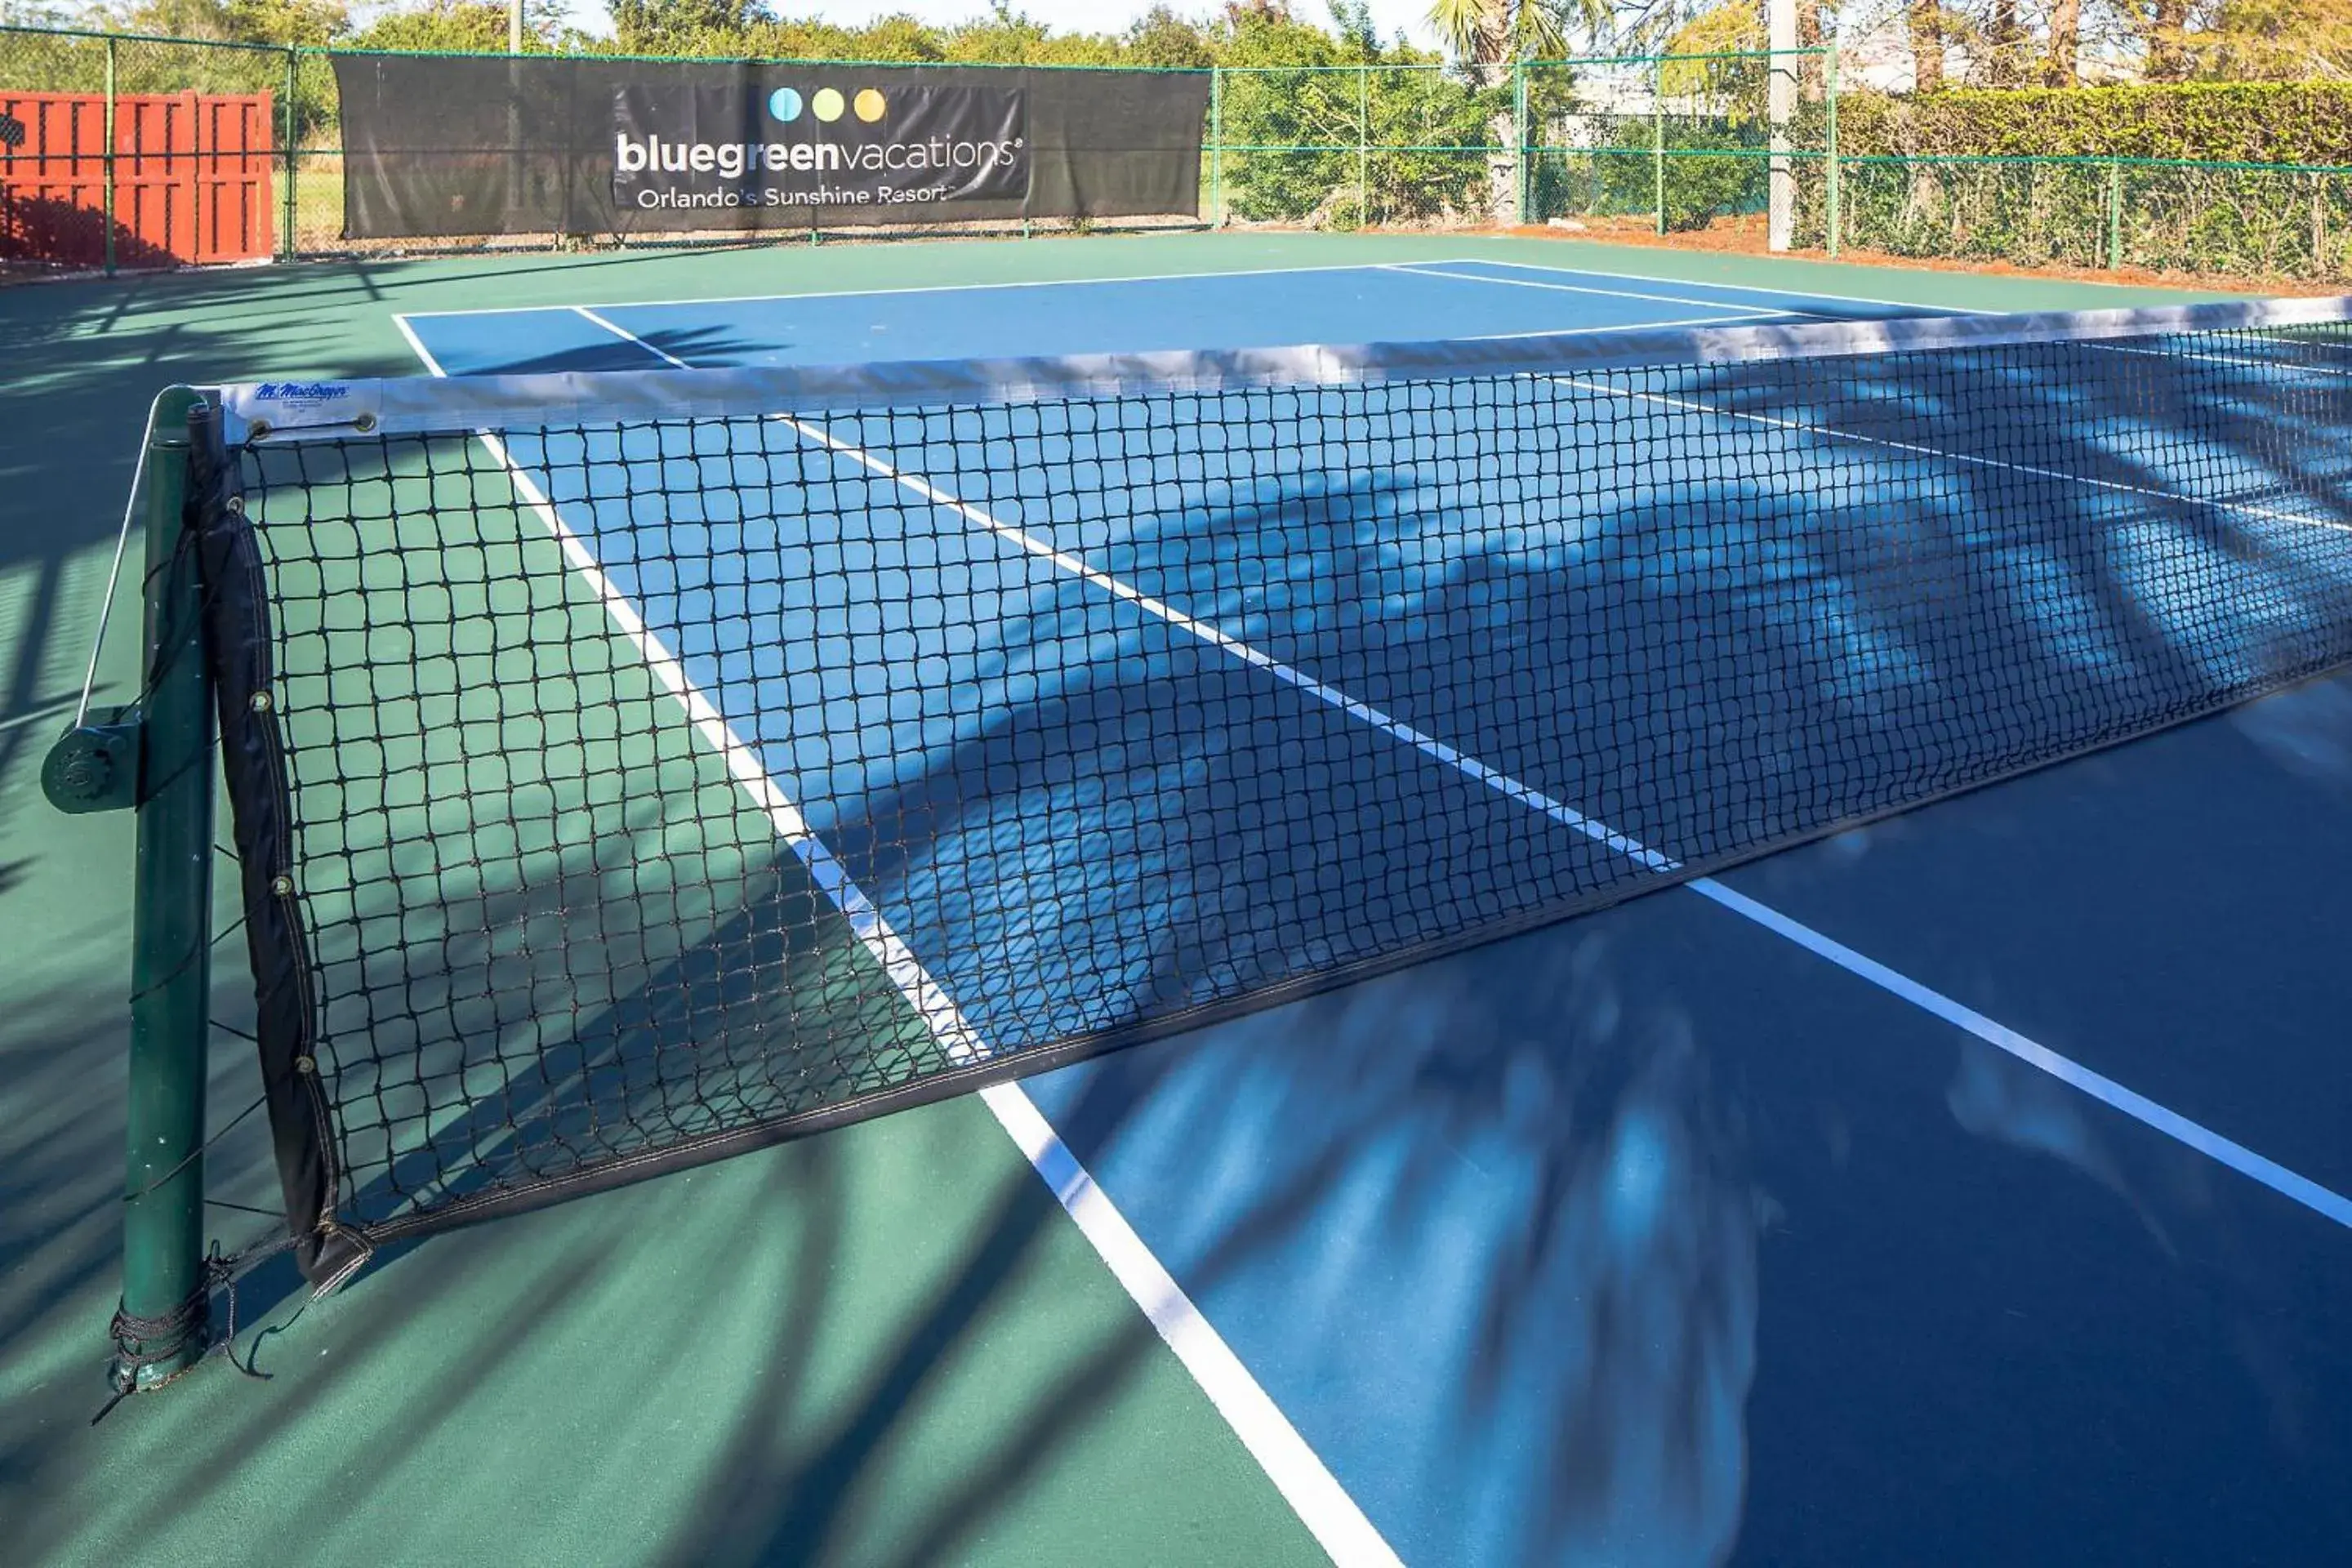 Activities, Tennis/Squash in Bluegreen Vacations Orlando's Sunshine Resort